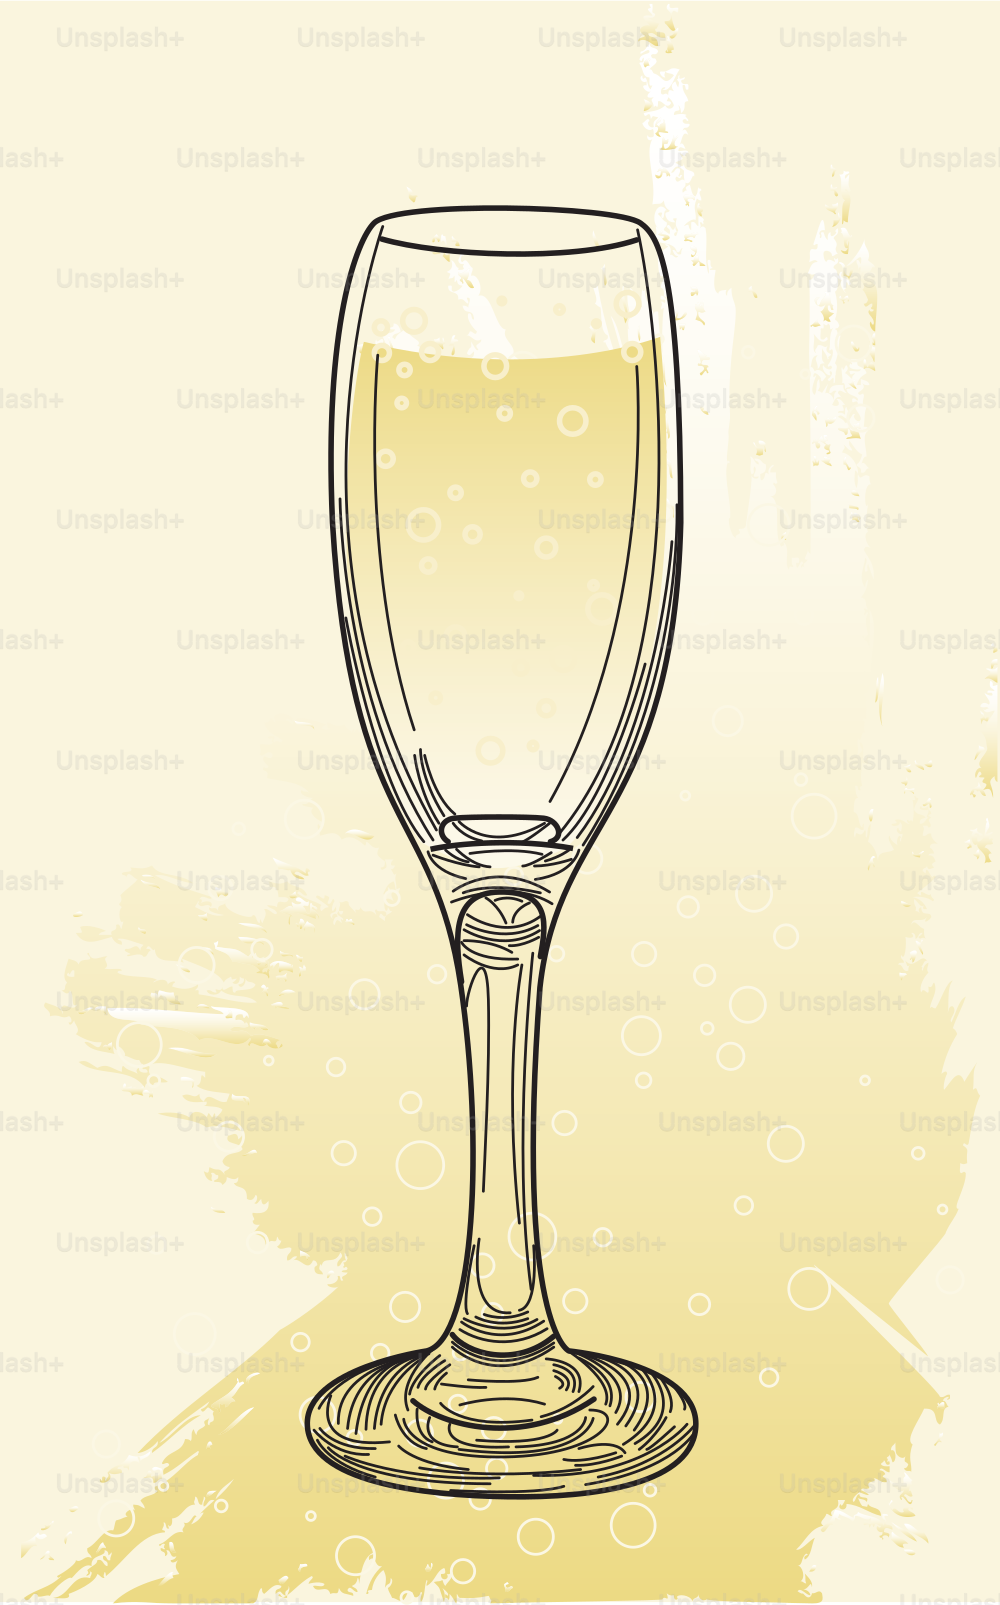 A glass of champagne on a splashy background.